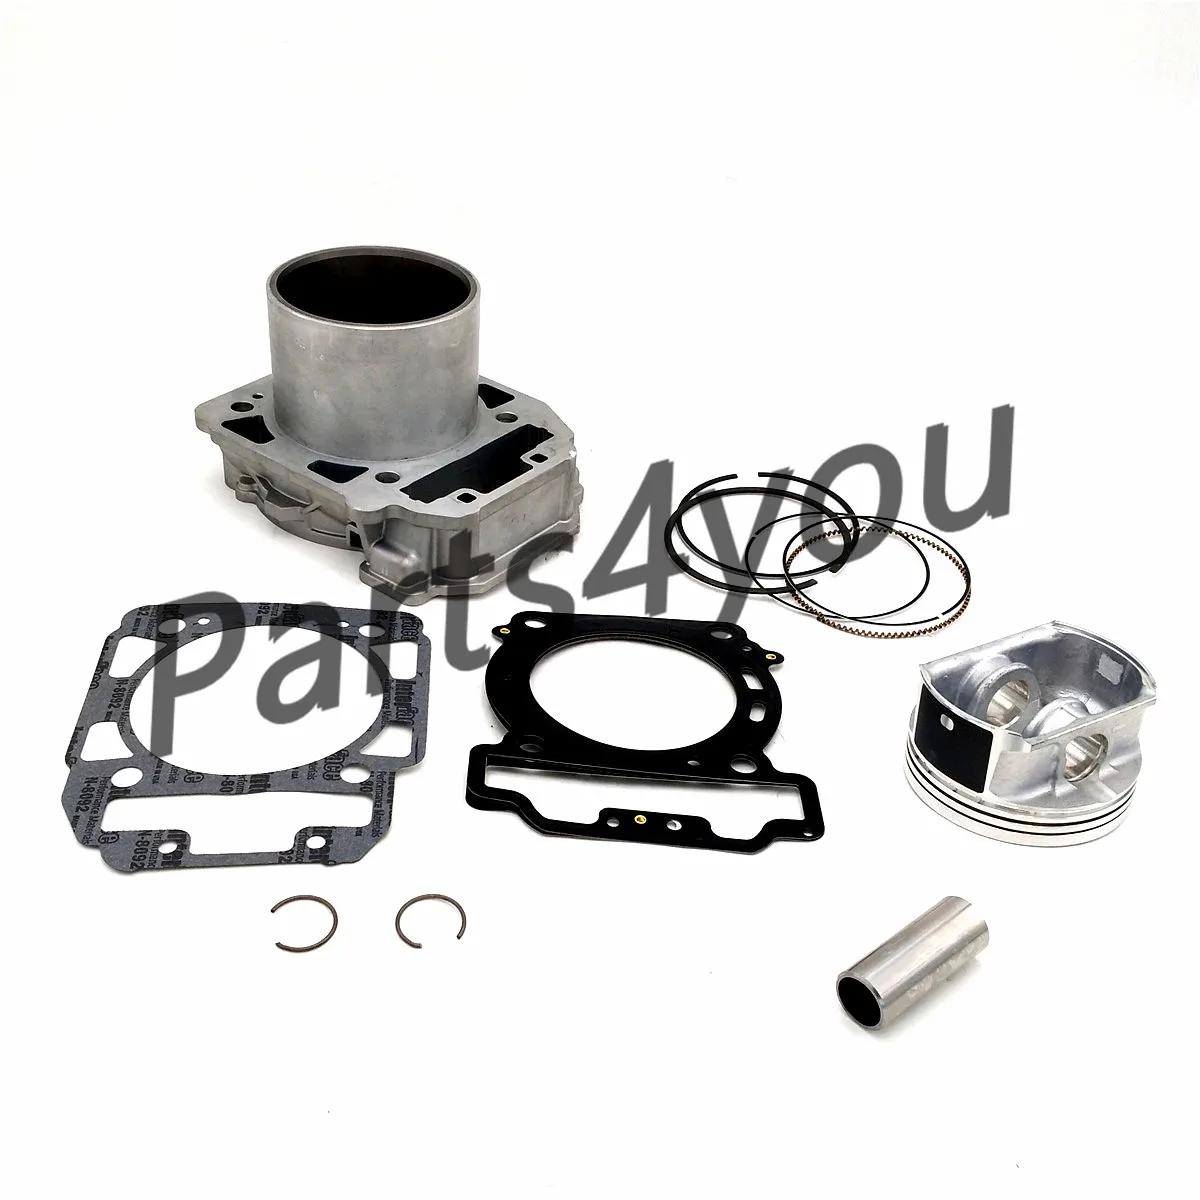 Cylinder piston kit For CFMOTO CF800 Z8 U8 X8 CF MOTO 800cc 800 ATV Quad UTV 0800-023100-0001 0800-023100-0002